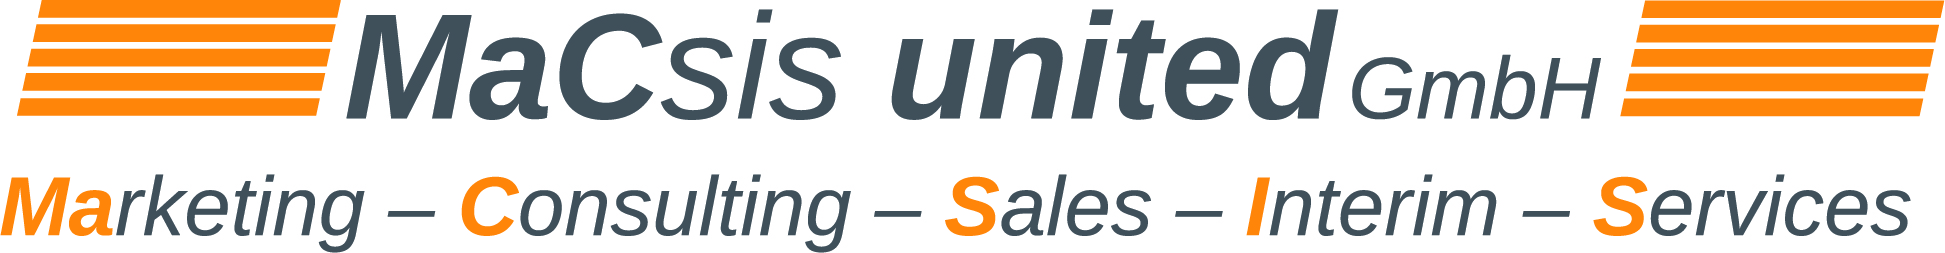 MaCsis united GmbH Logo